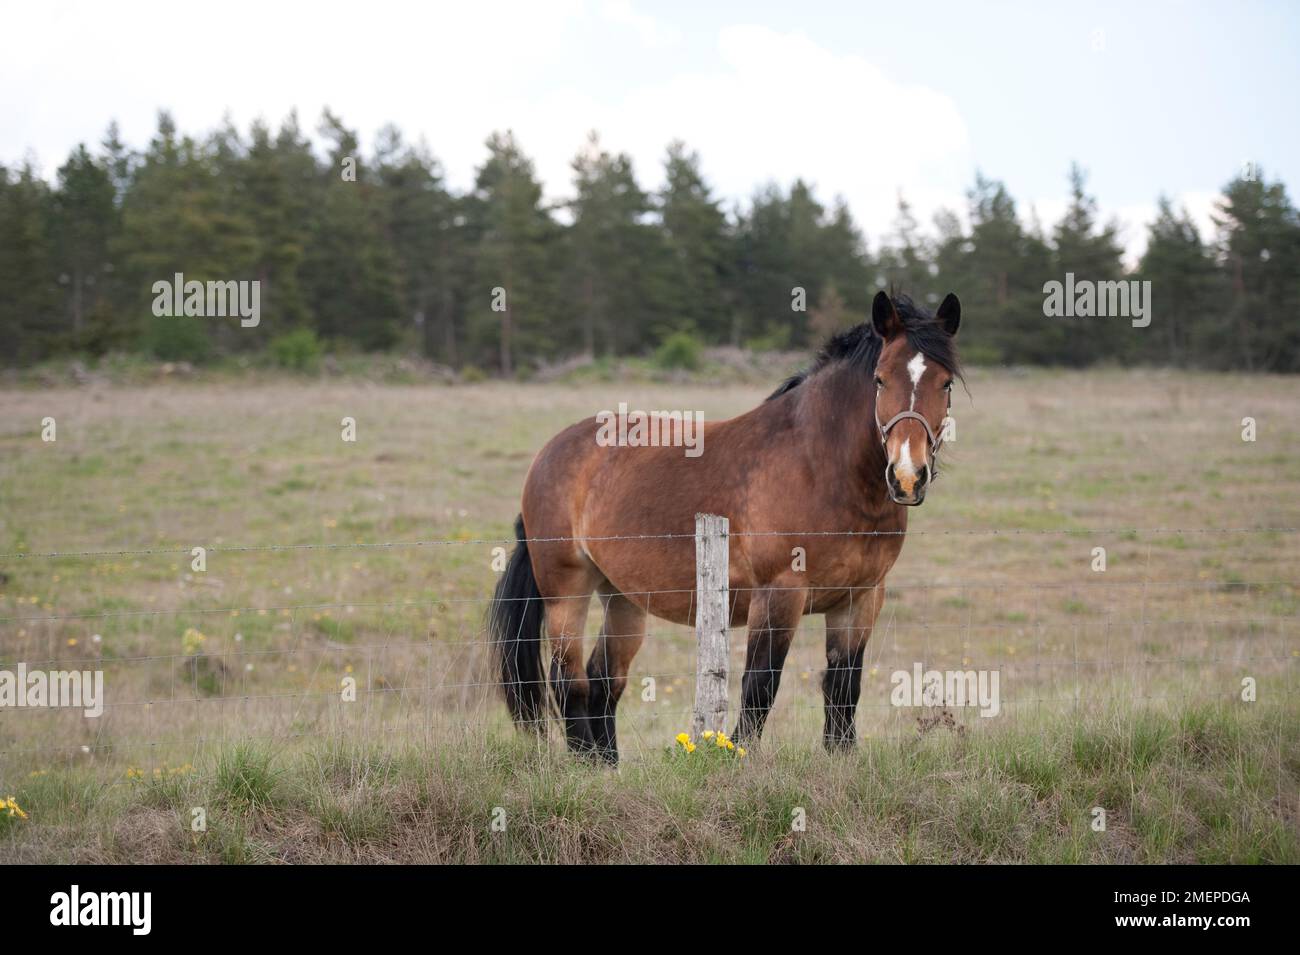 Frankreich, Languedoc-Roussillon, Lozere, Pferderennen hinter Stacheldrahtzaun im Feld Stockfoto